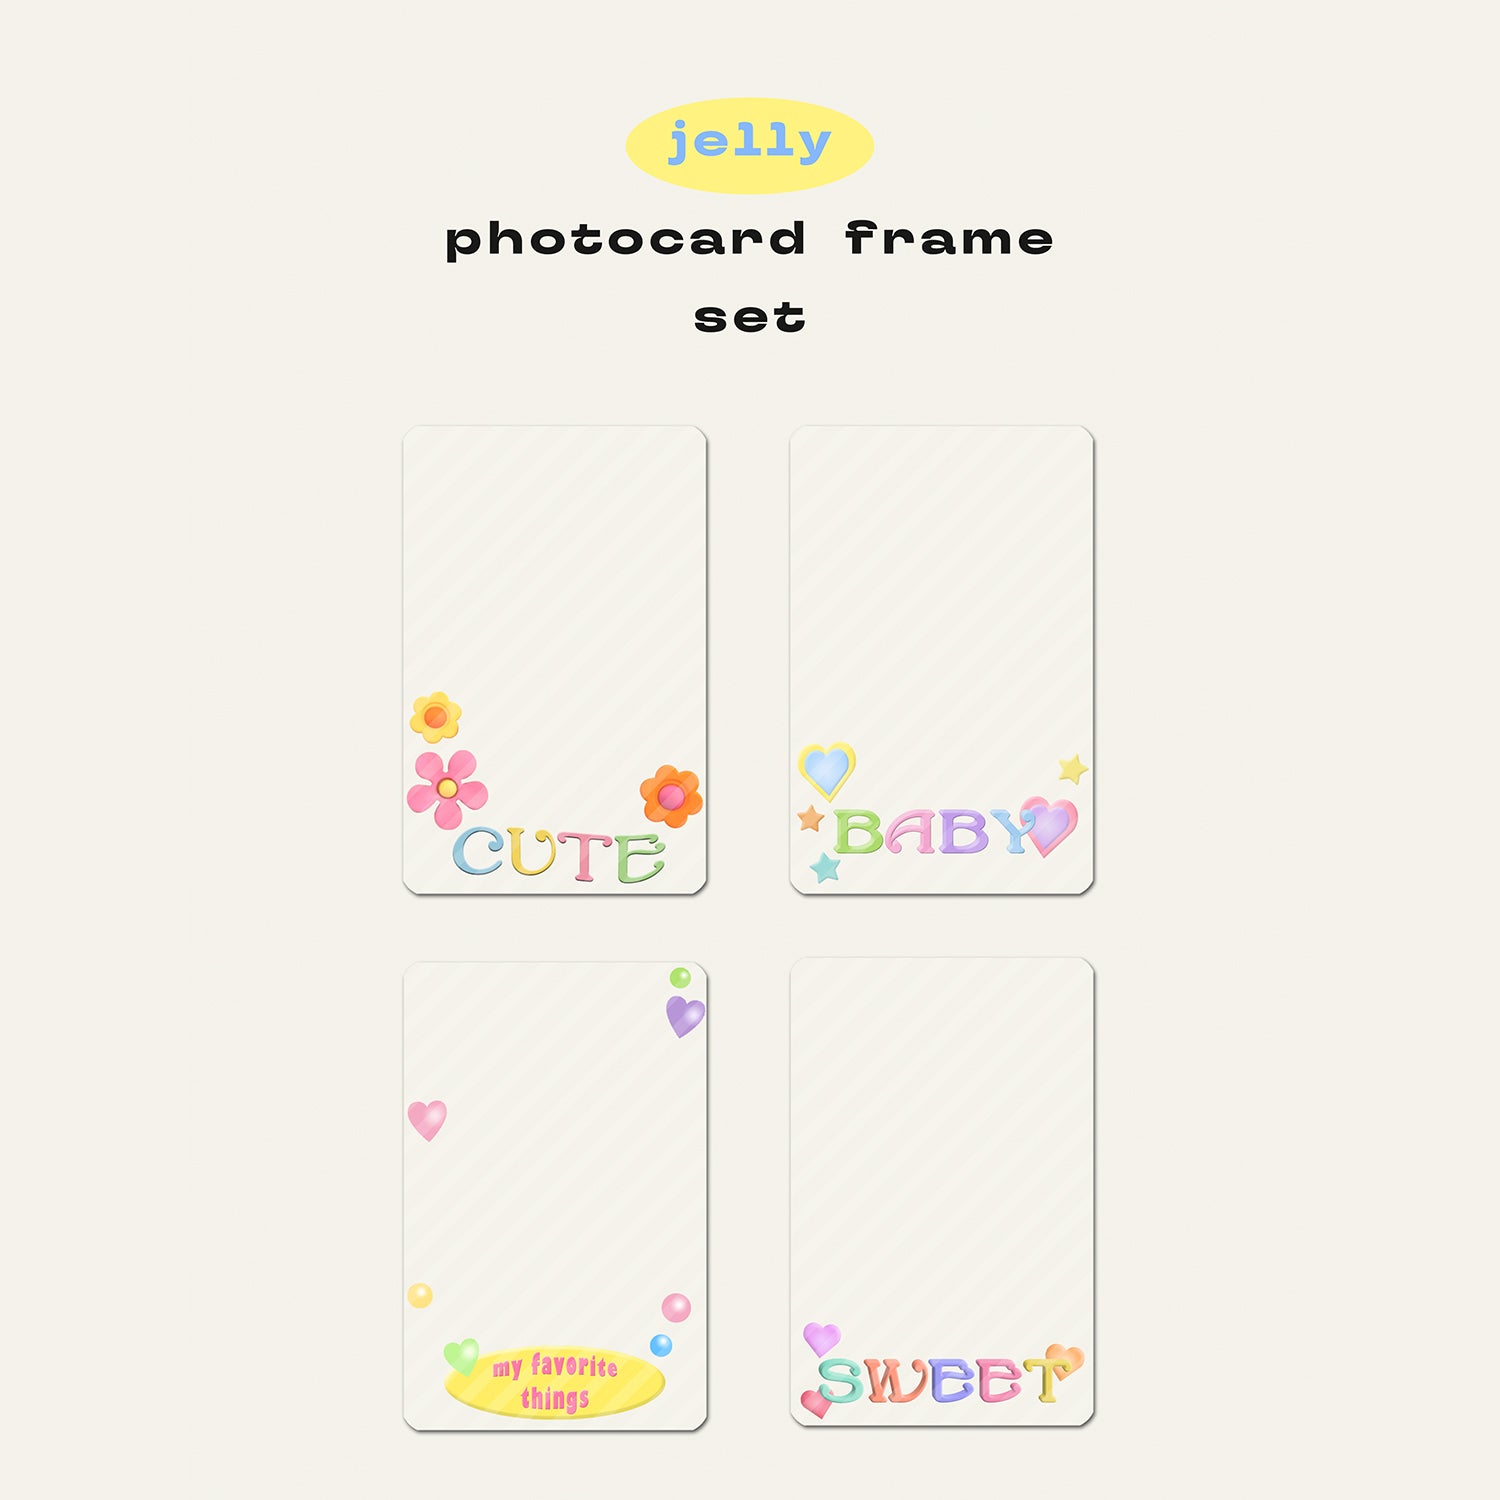 JELLY photocard frame set